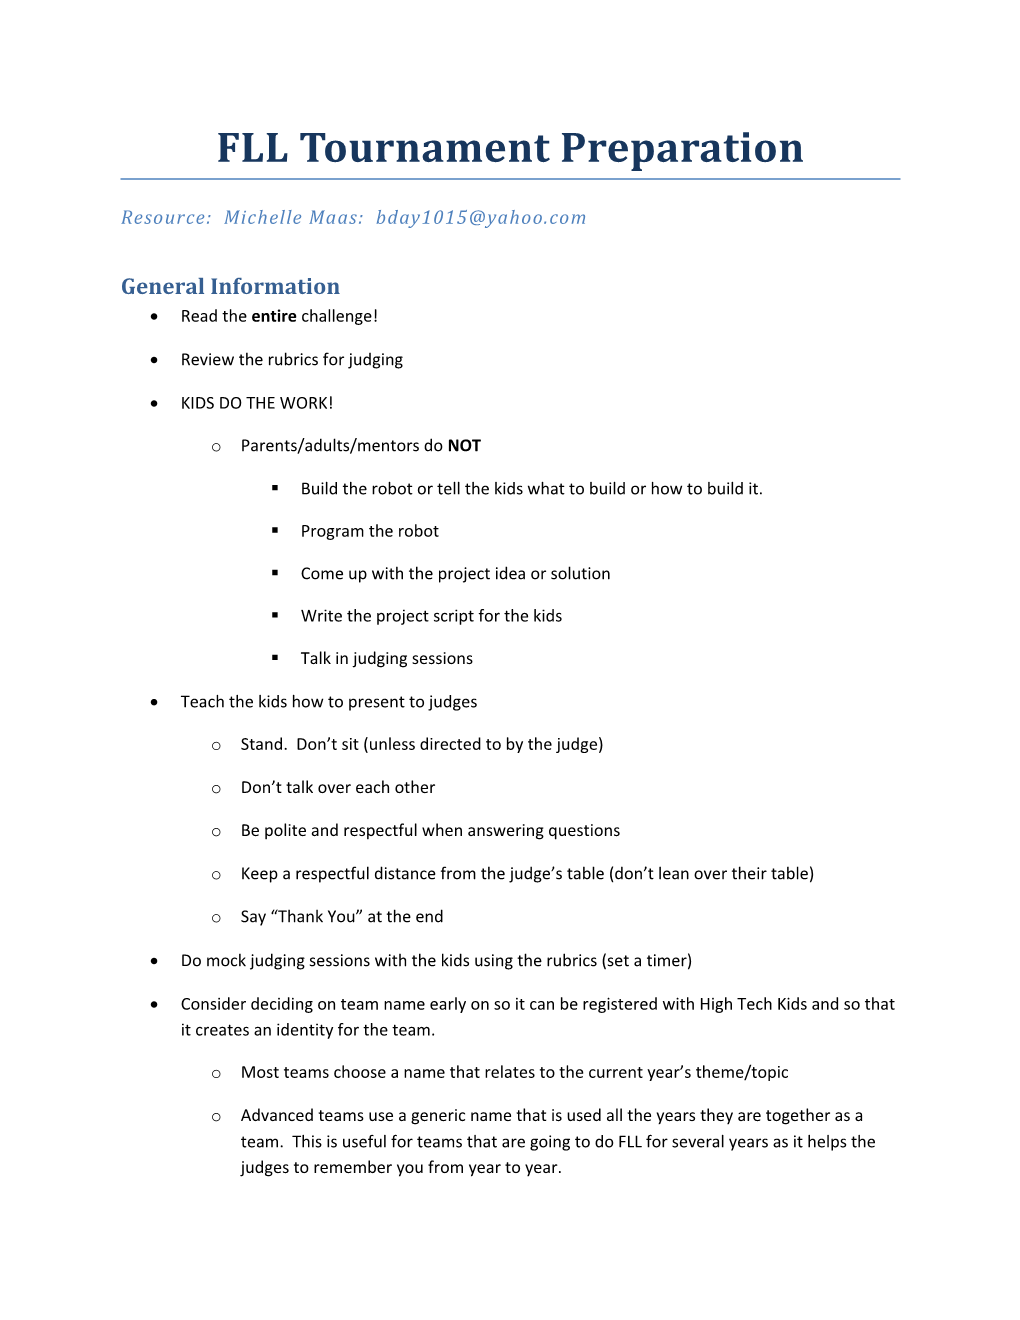 FLL Tournament Preparation